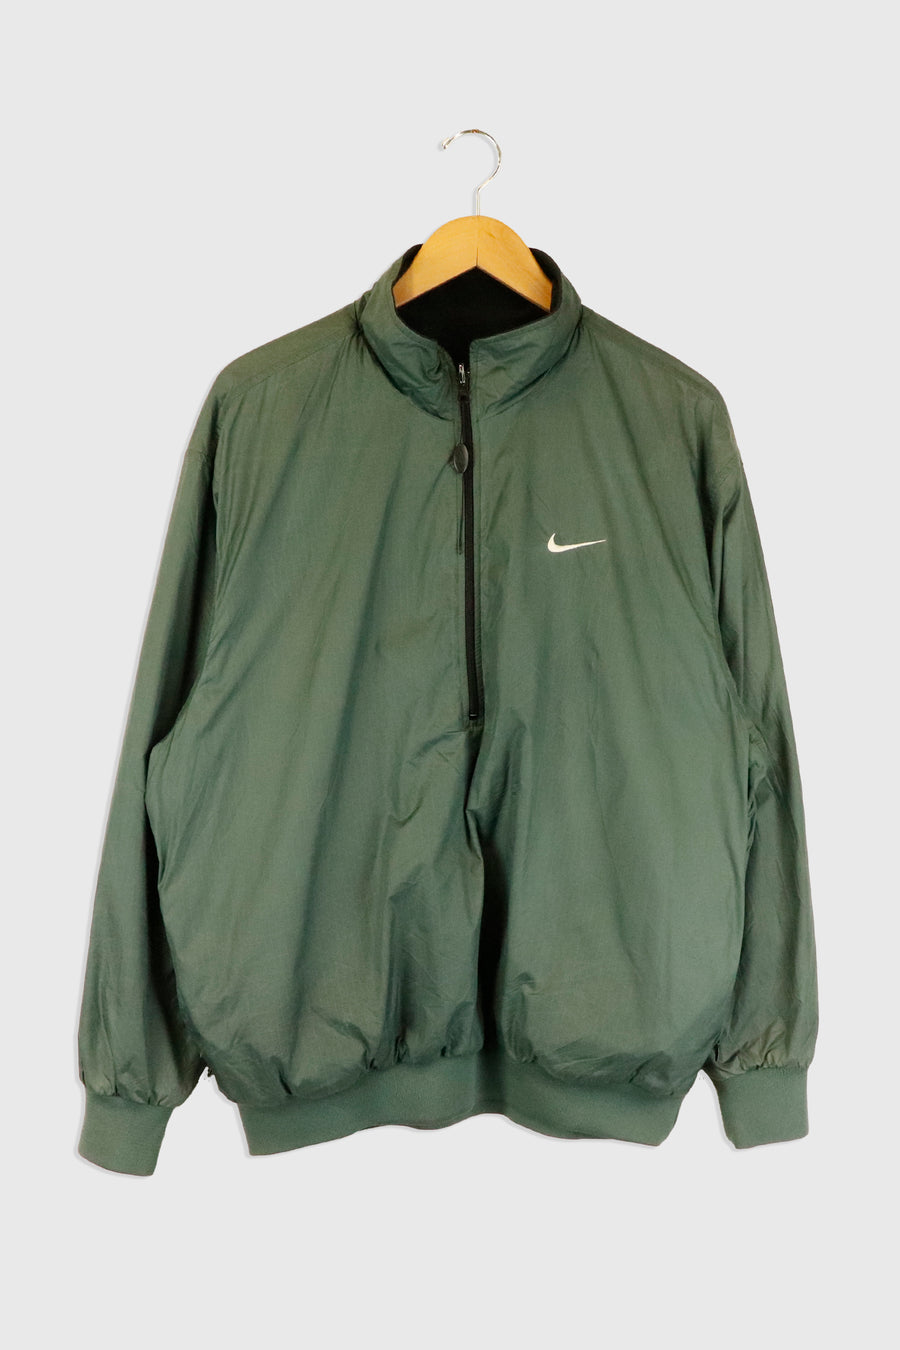 Vintage Nike Reversible Green To Black Full Zip Jacket